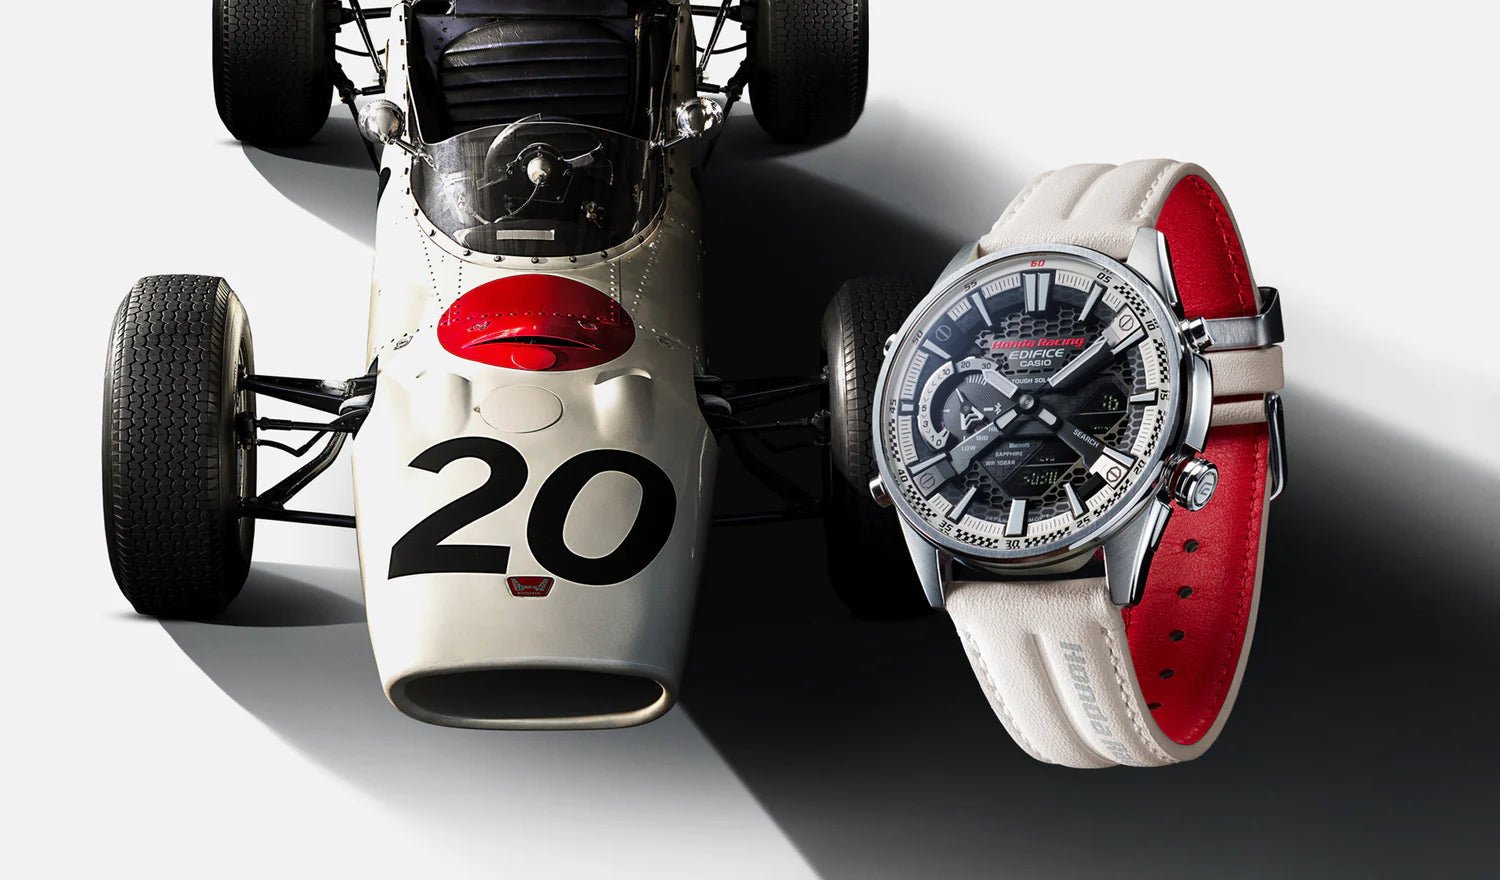 Automative Inspired Design, the latest Honda Racing watch from EDIFICE - CASIO Australia